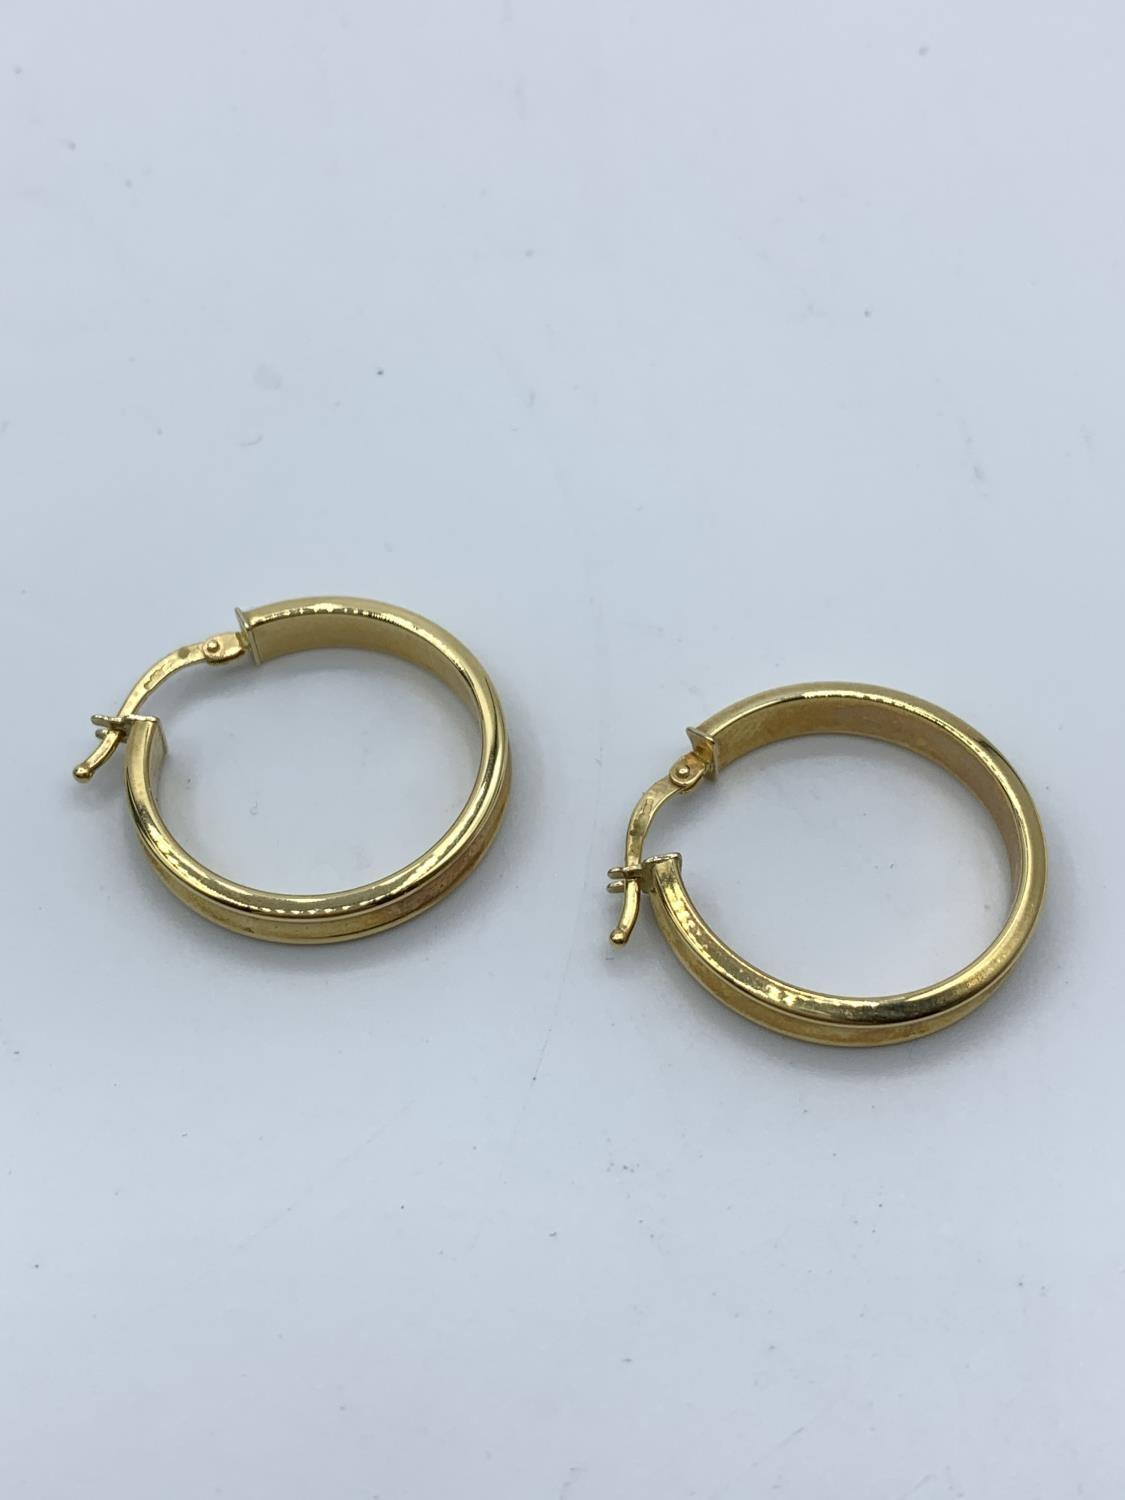 Pair of 18K Yellow Gold Hoop Earrings in original presentation box, weight 2.2g and 2cm diameter - Image 8 of 10